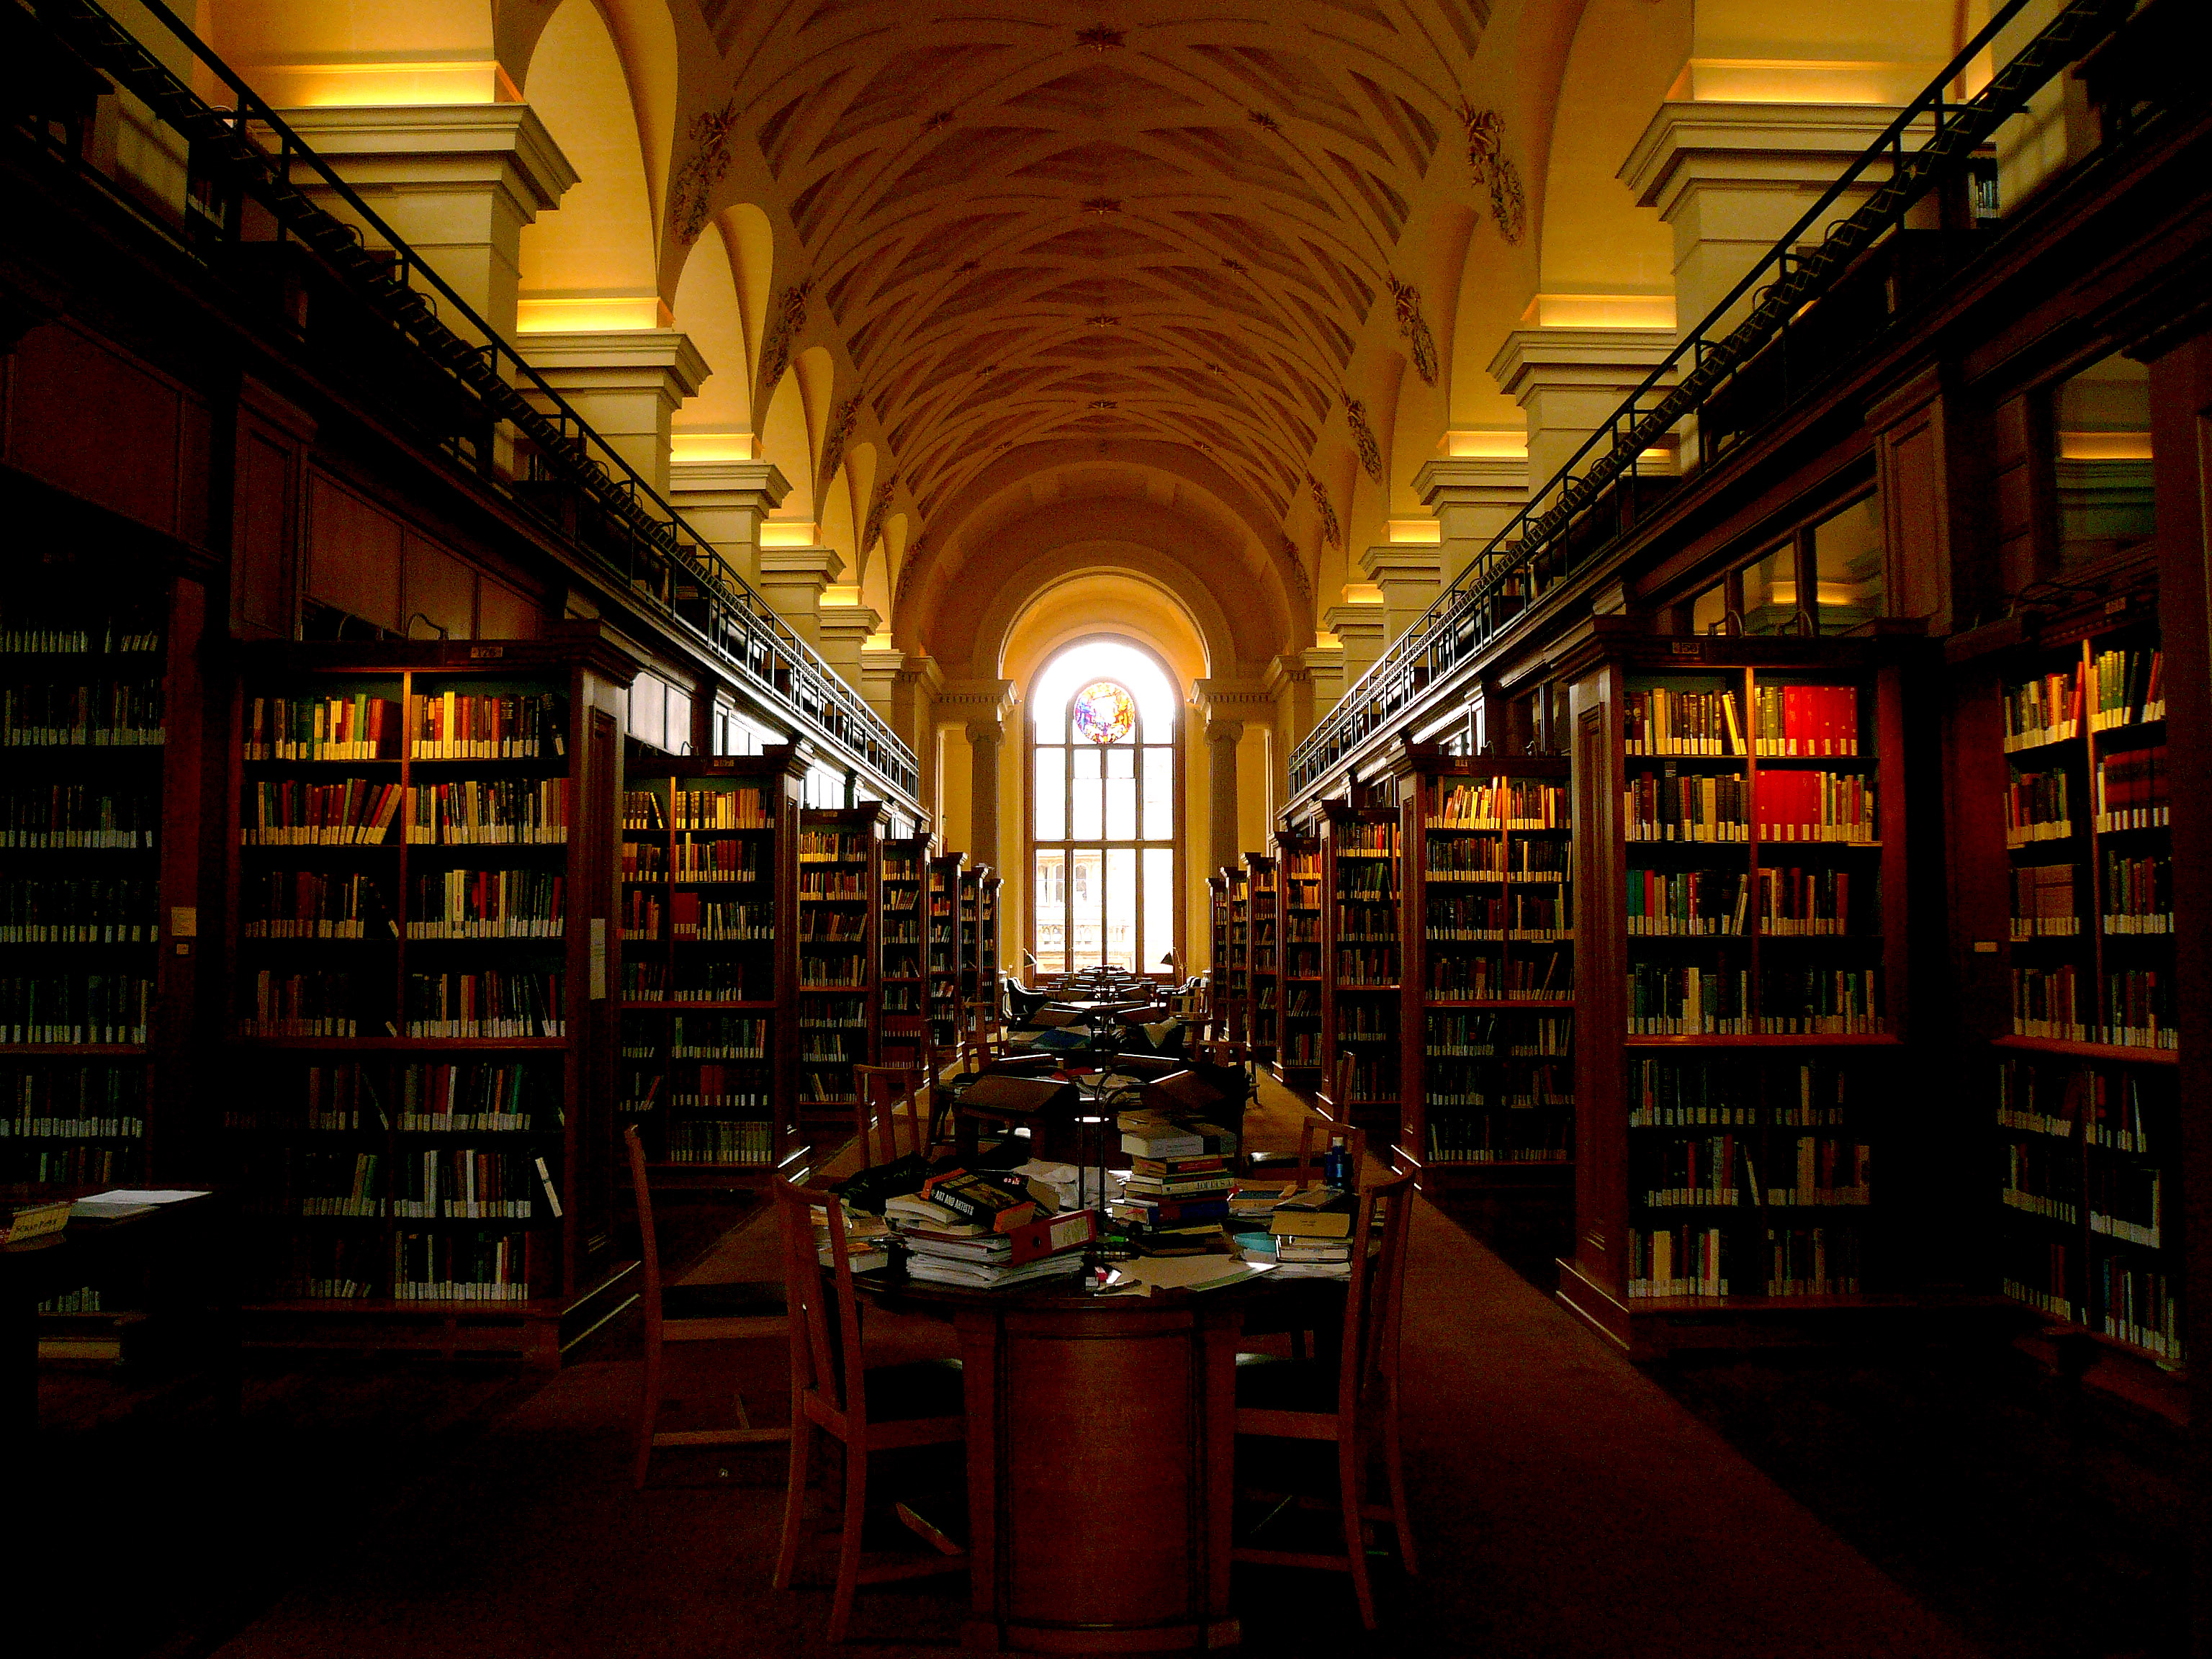 Library 1.8. Библиотека Кембриджского университета. Кембриджская Университетская библиотека. Кембридж университет библиотека. Кембриджский университет внутри библиотека.